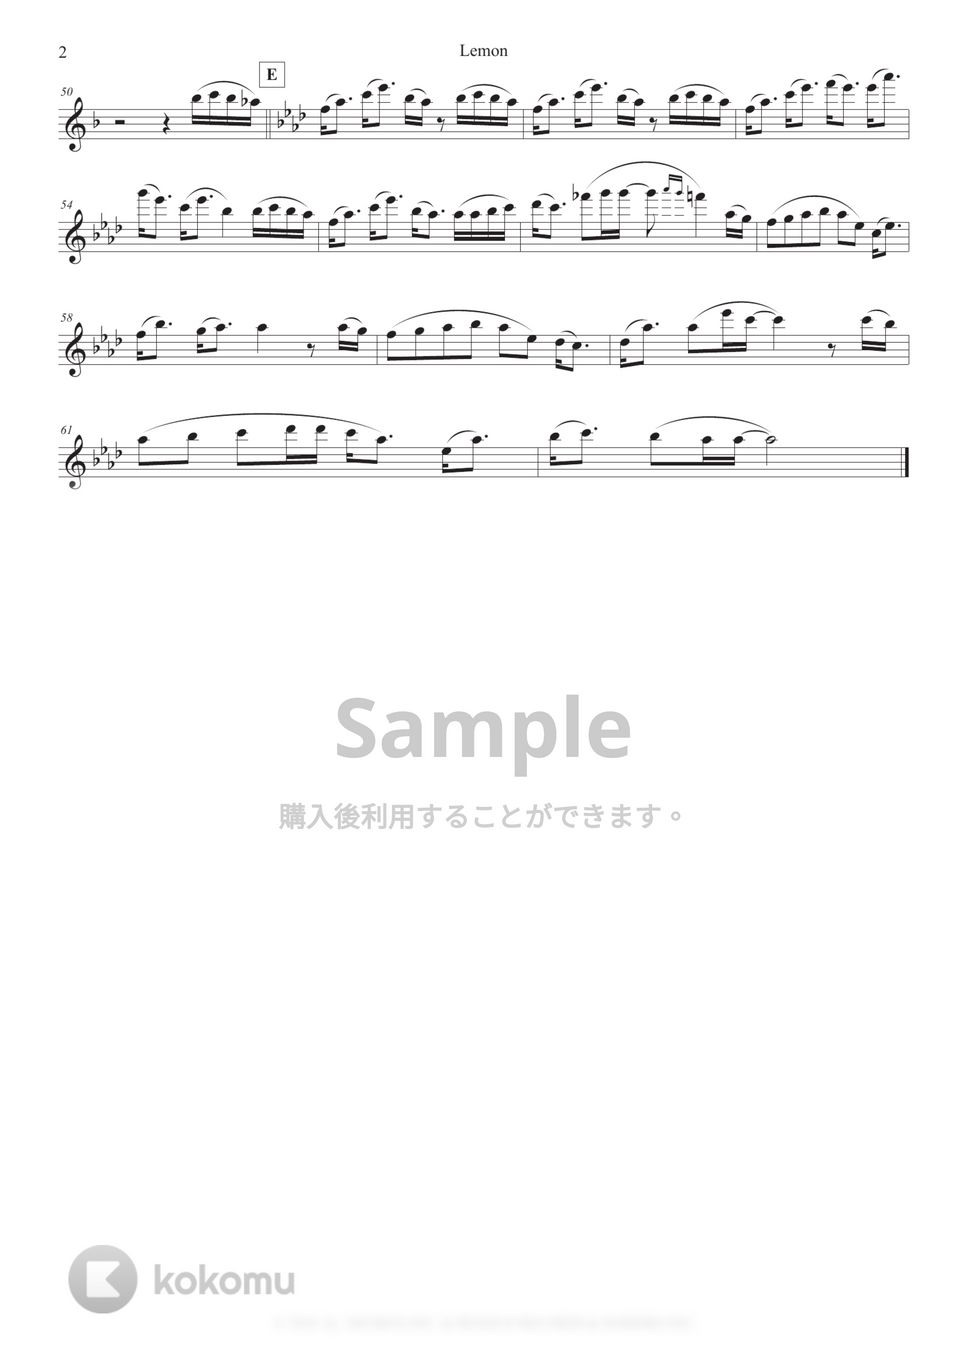 米津玄師 - Lemon (in Eb/上級 Original Key) by Sumika